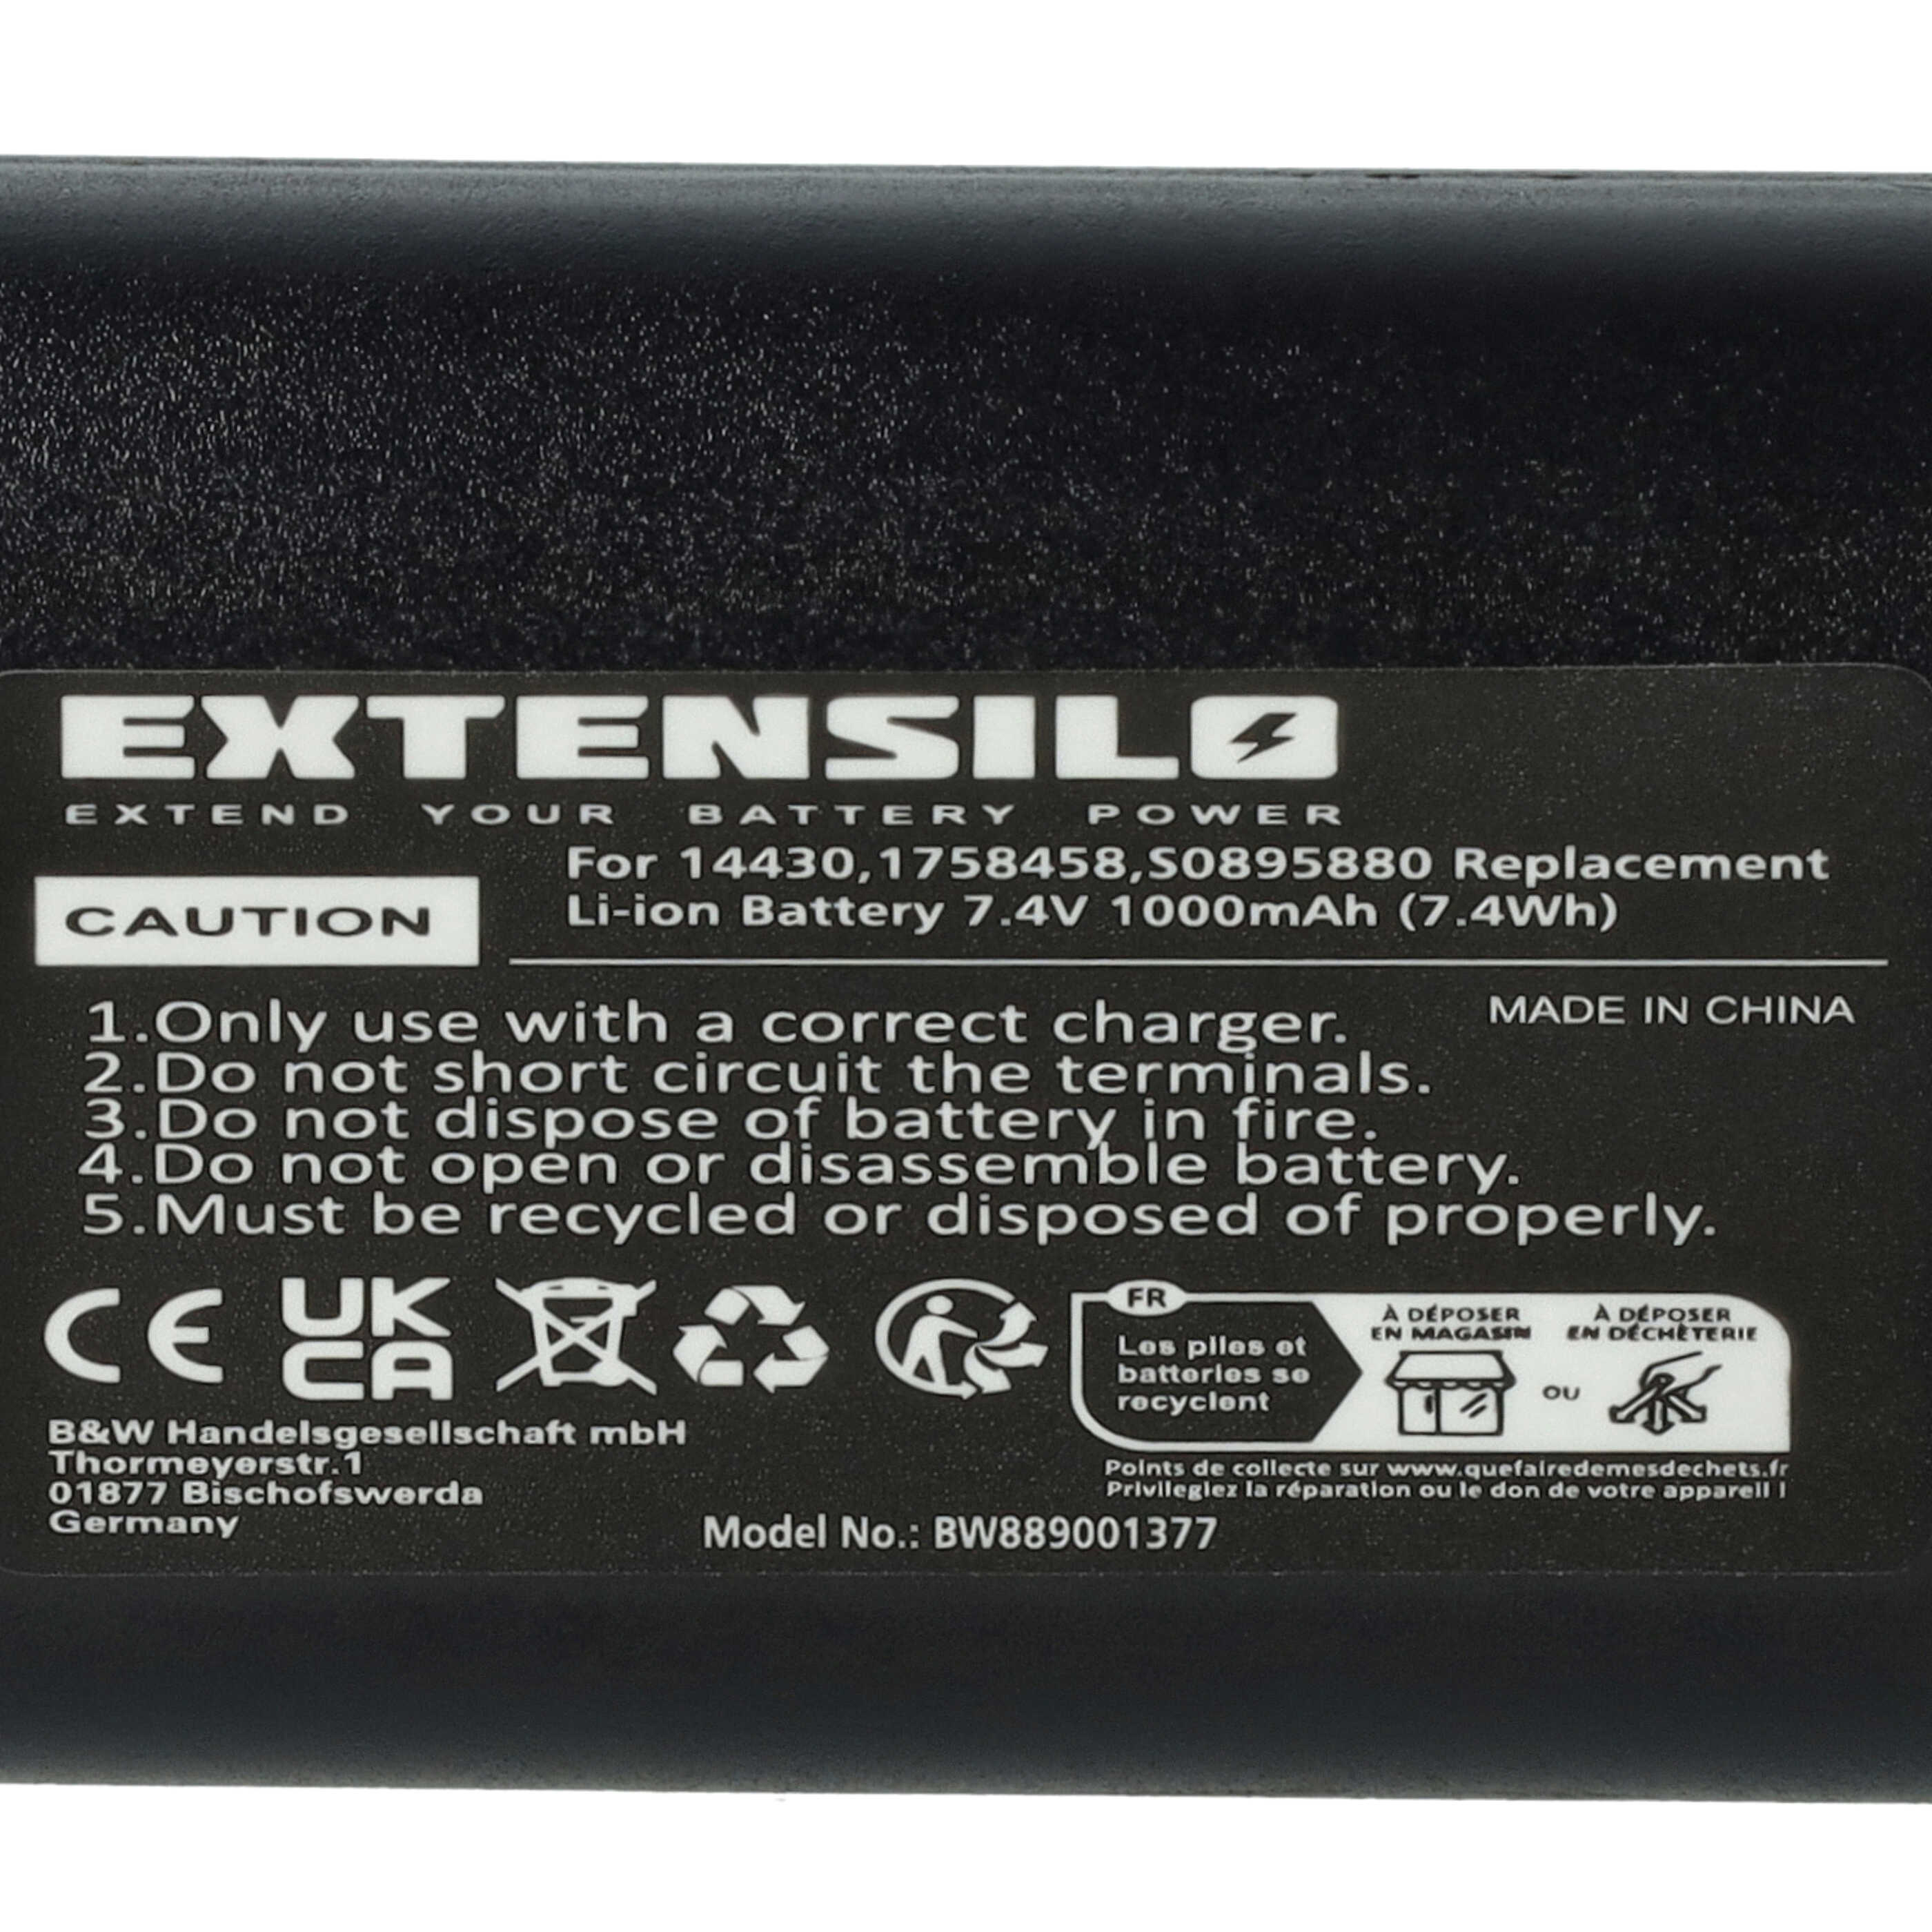 Akumulator do drukarki / drukarki etykiet zamiennik 3M W003688, S0895880 - 1000 mAh 7,4 V Li-Ion